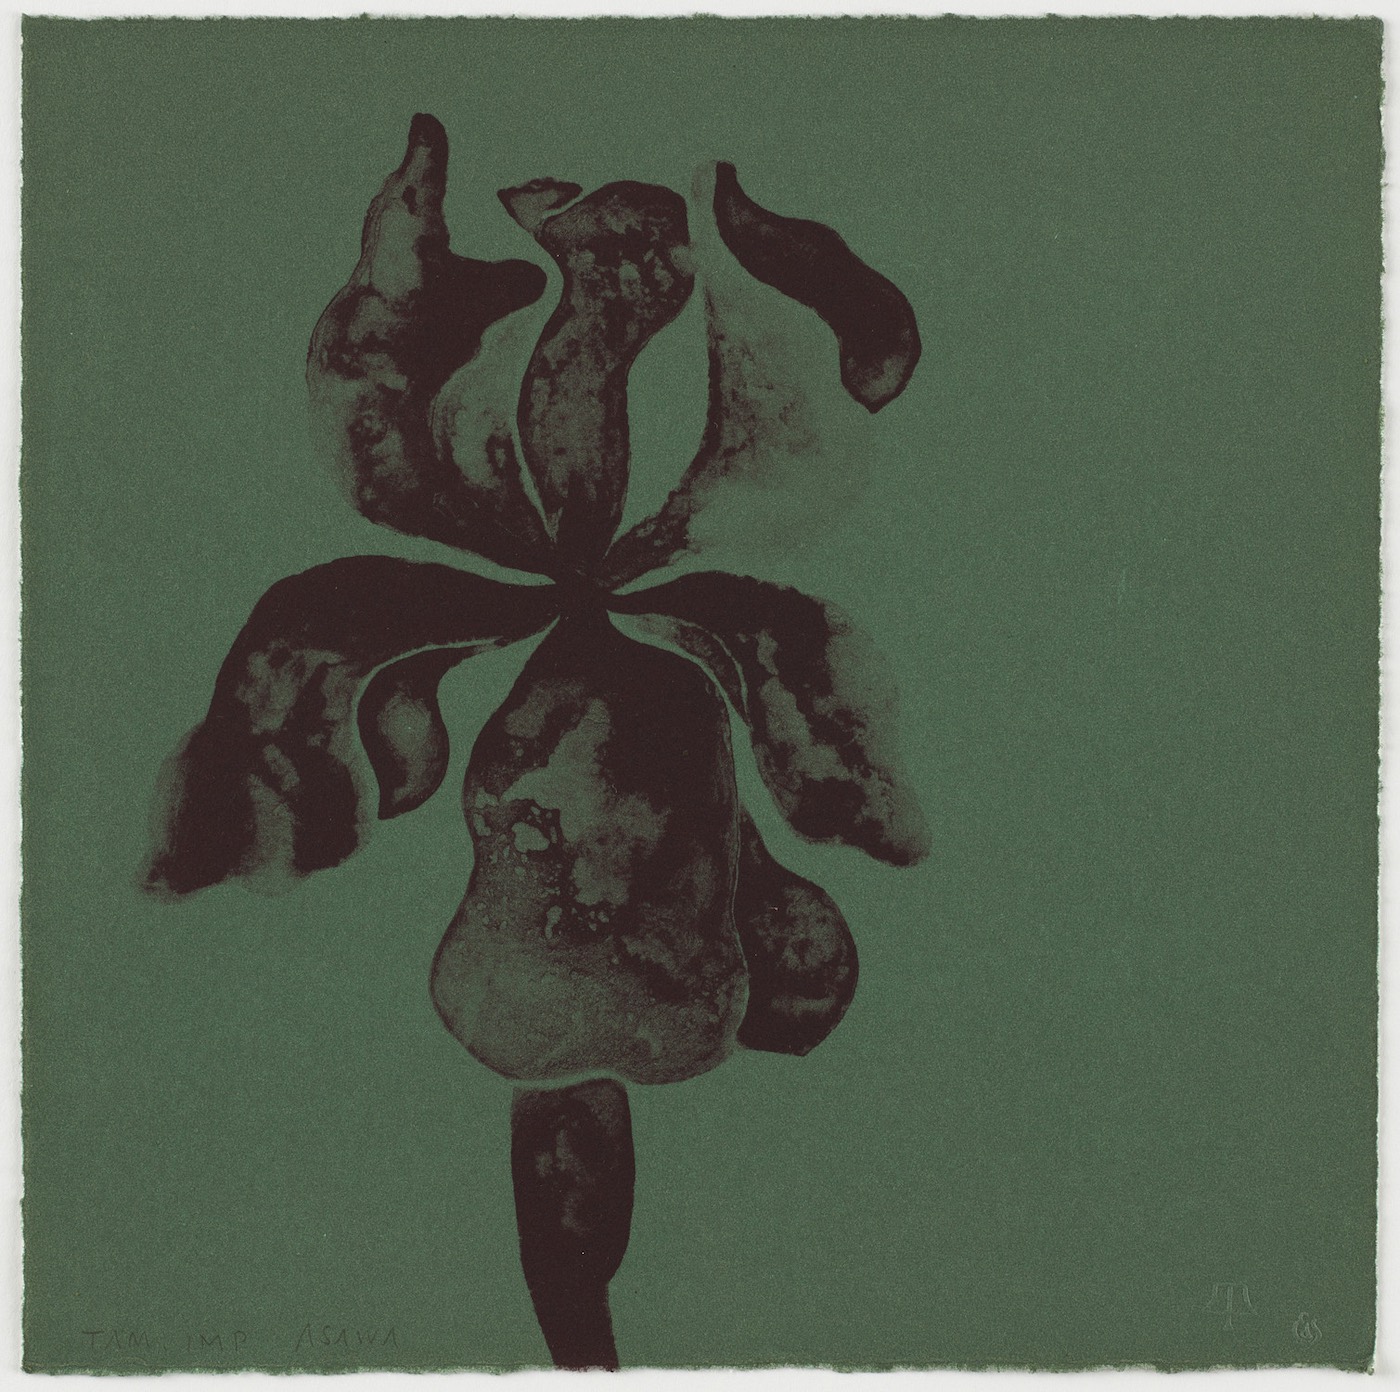 Print of a flower, dark brown ink on green paper